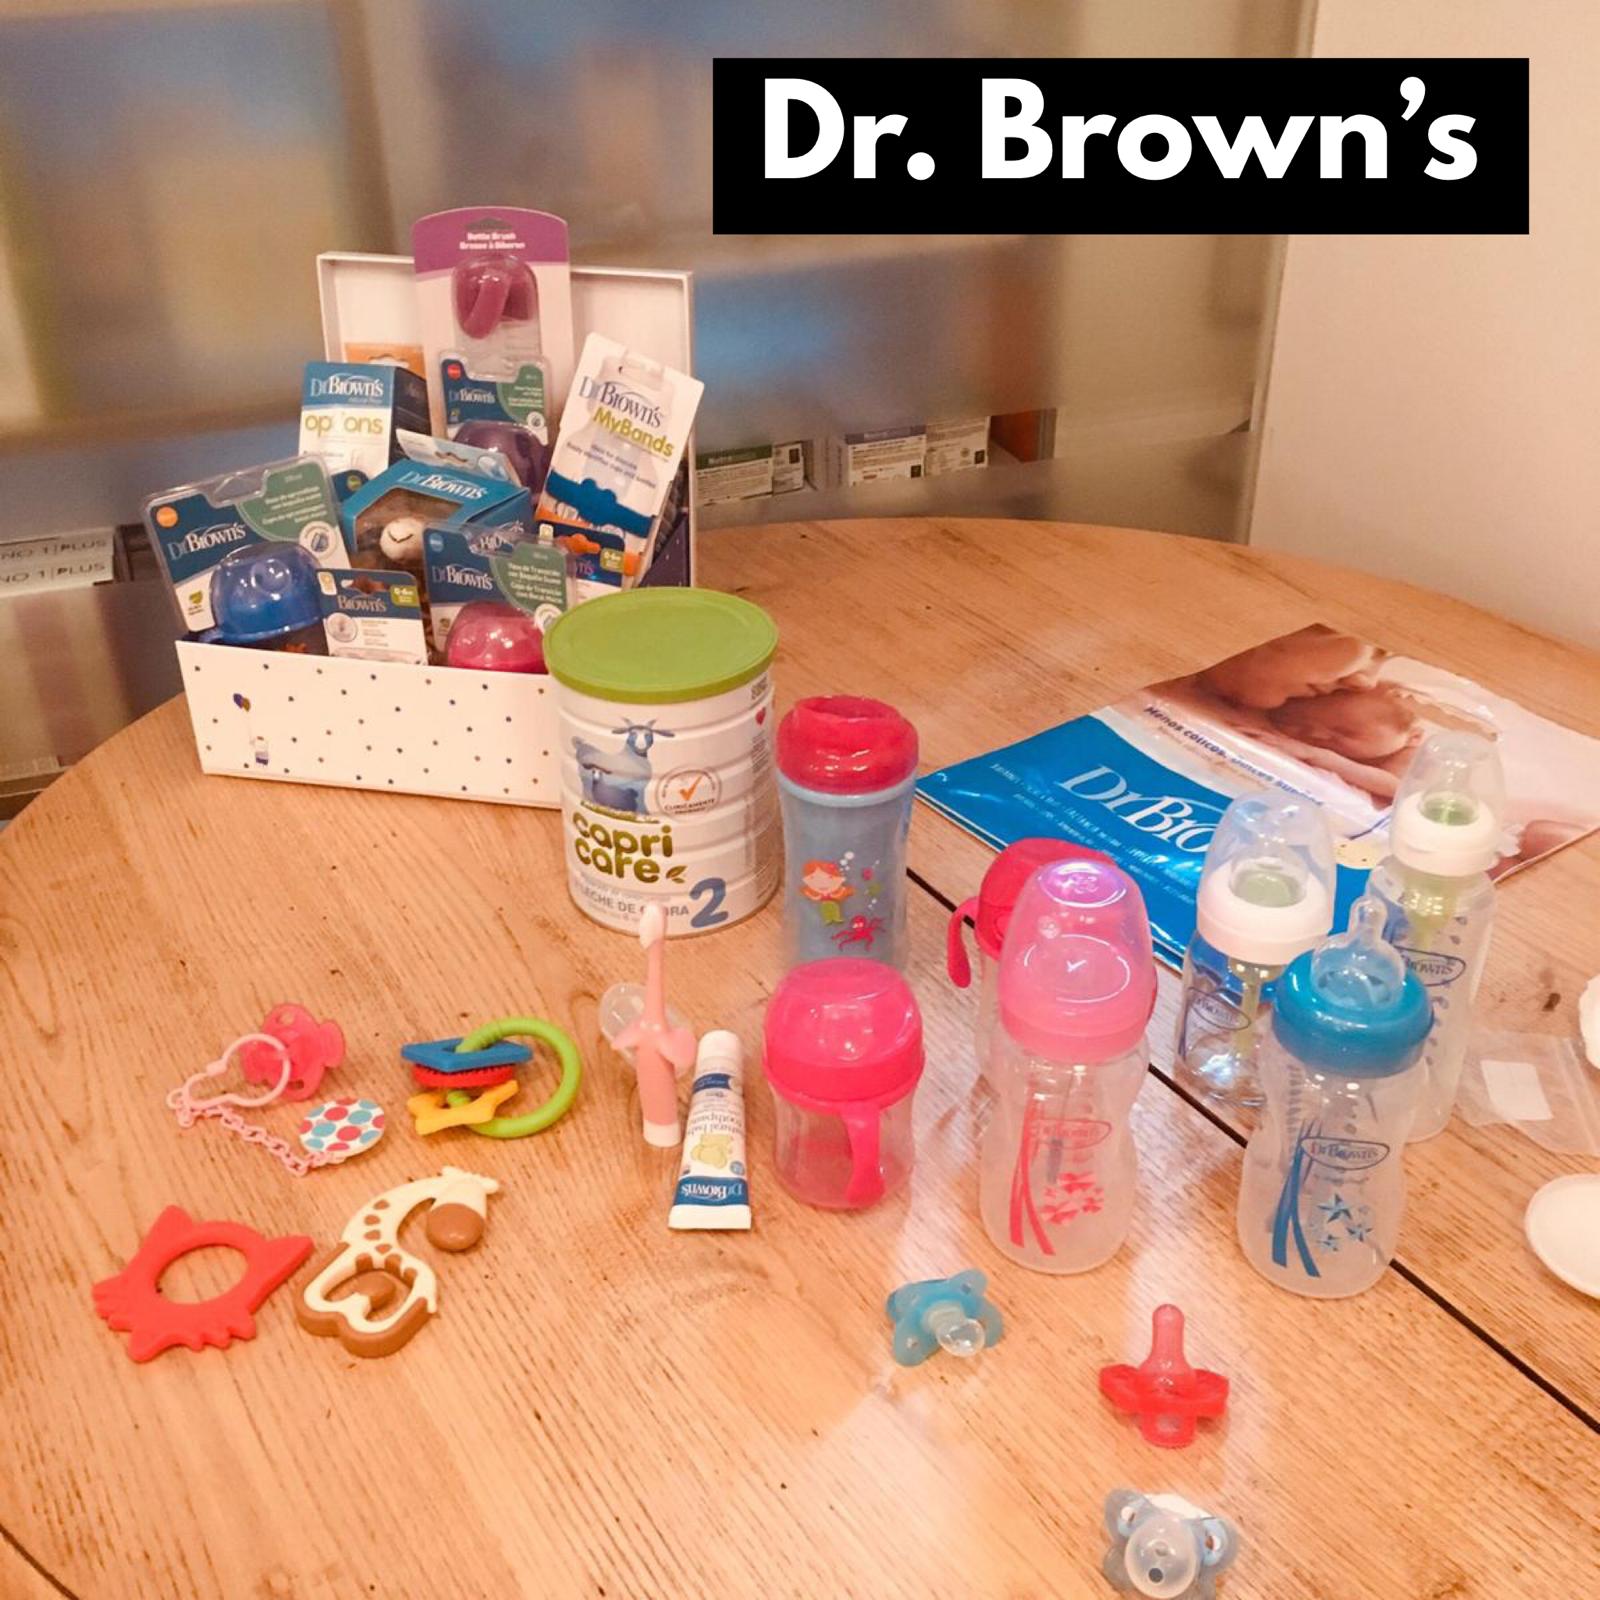 Dr. Brown's Baby Shower en Farmacia Corredoria